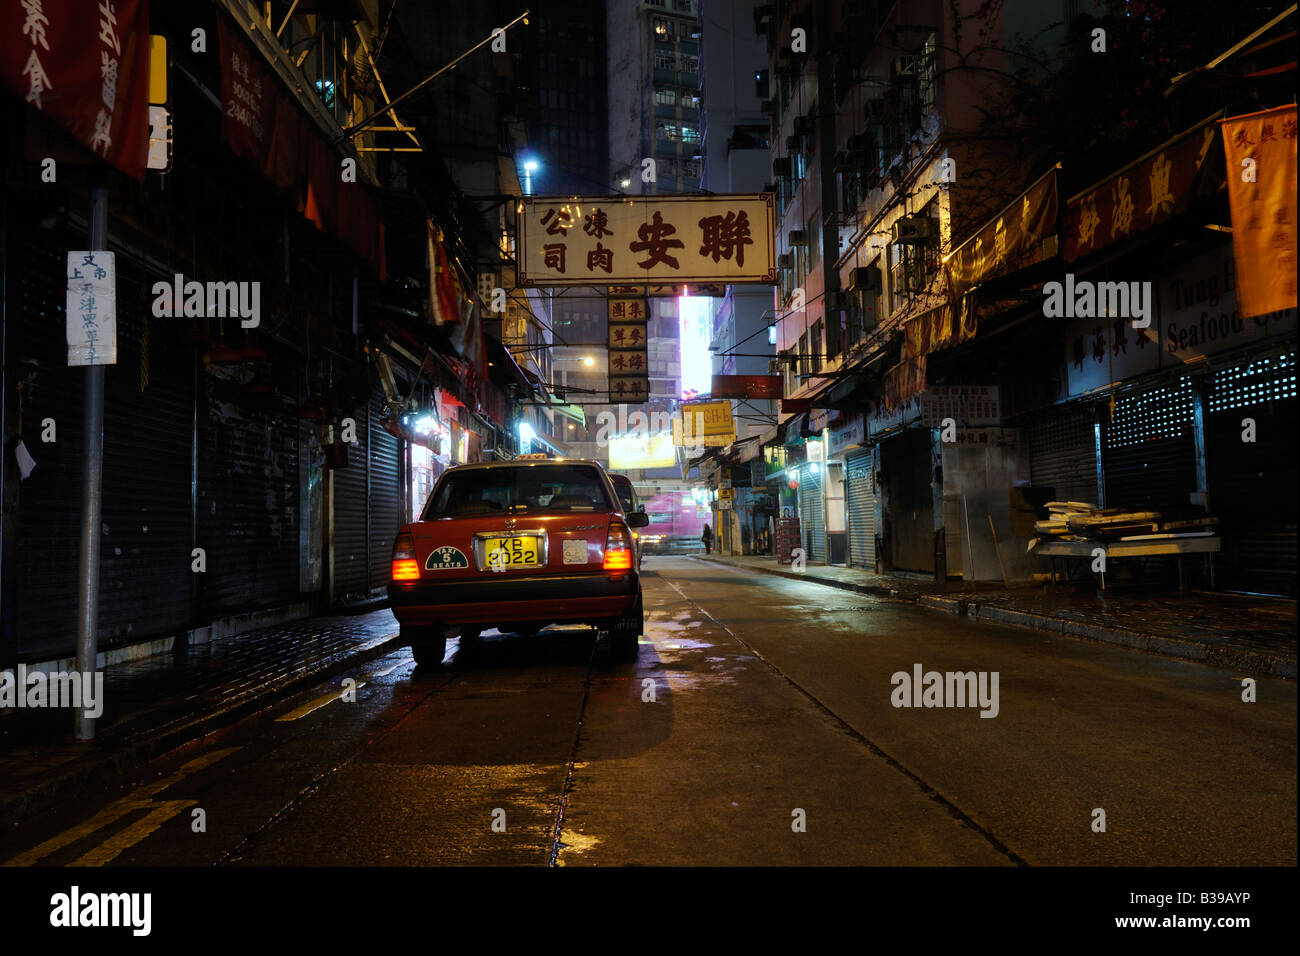 A Hong Kong taxi waiting while customer pays the fare at night in Wan Chai. Stock Photo